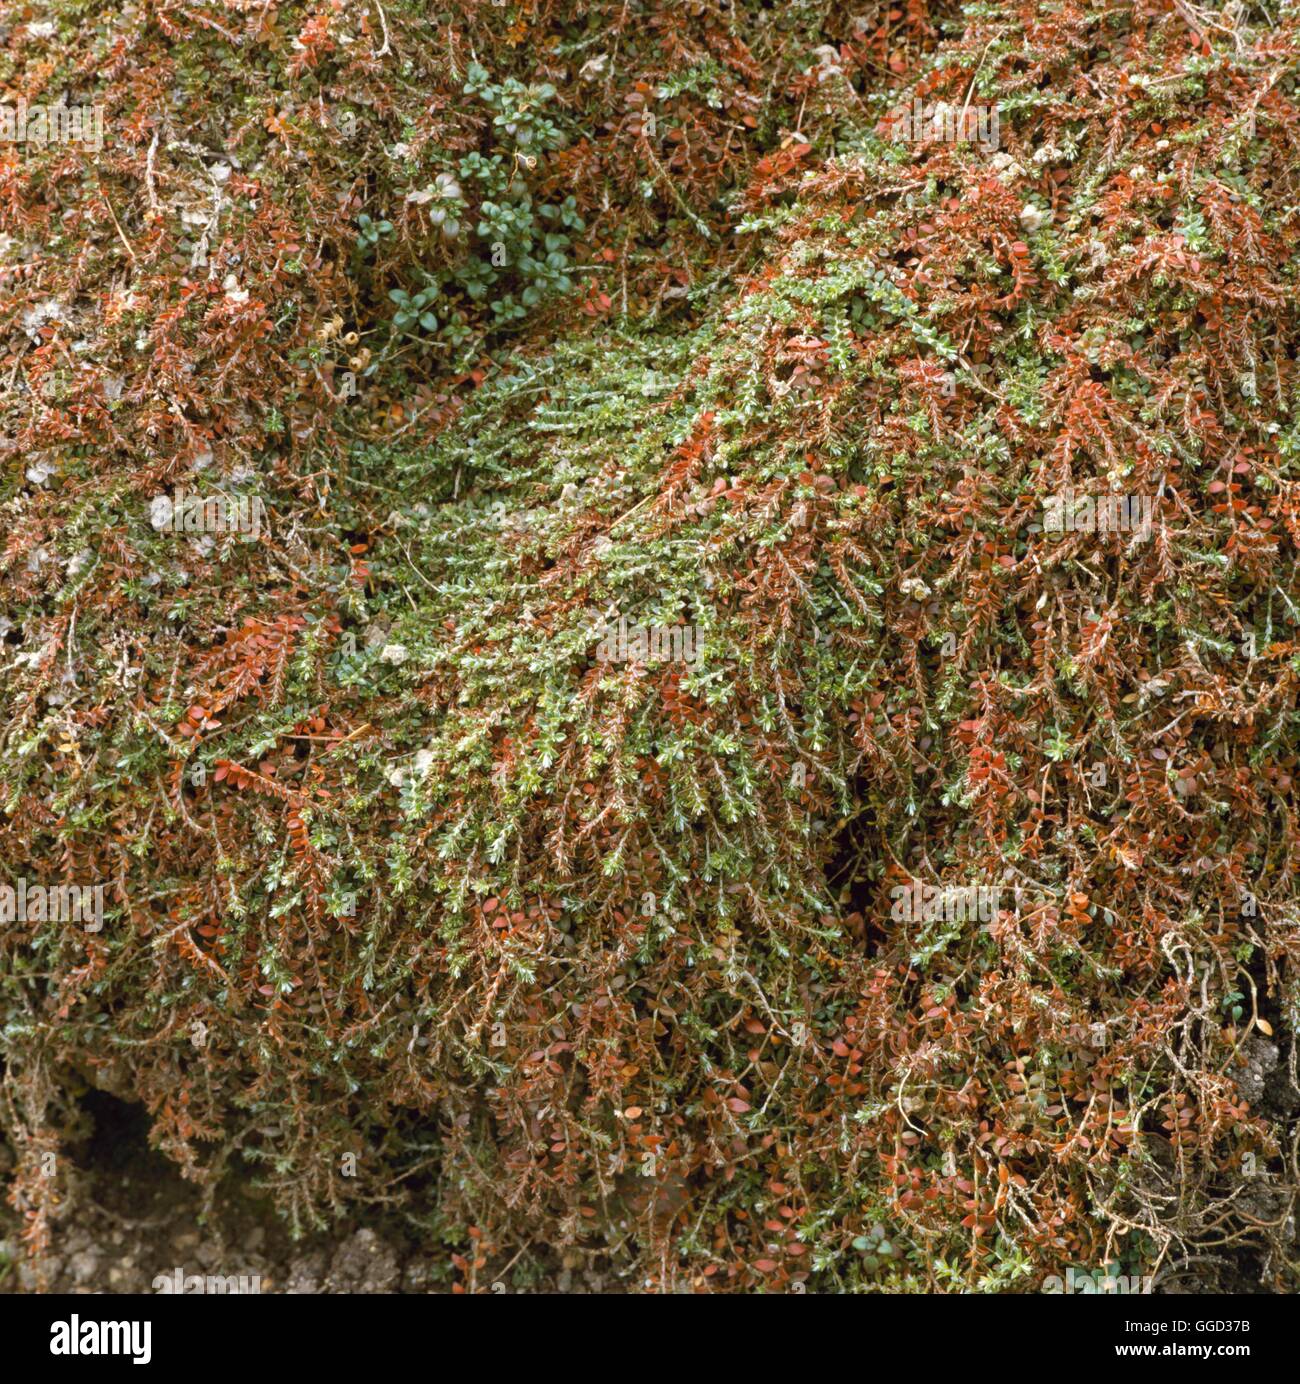 Paronychia Kapela - Subspecies Serpyllifolia ALP047316 Stockfoto